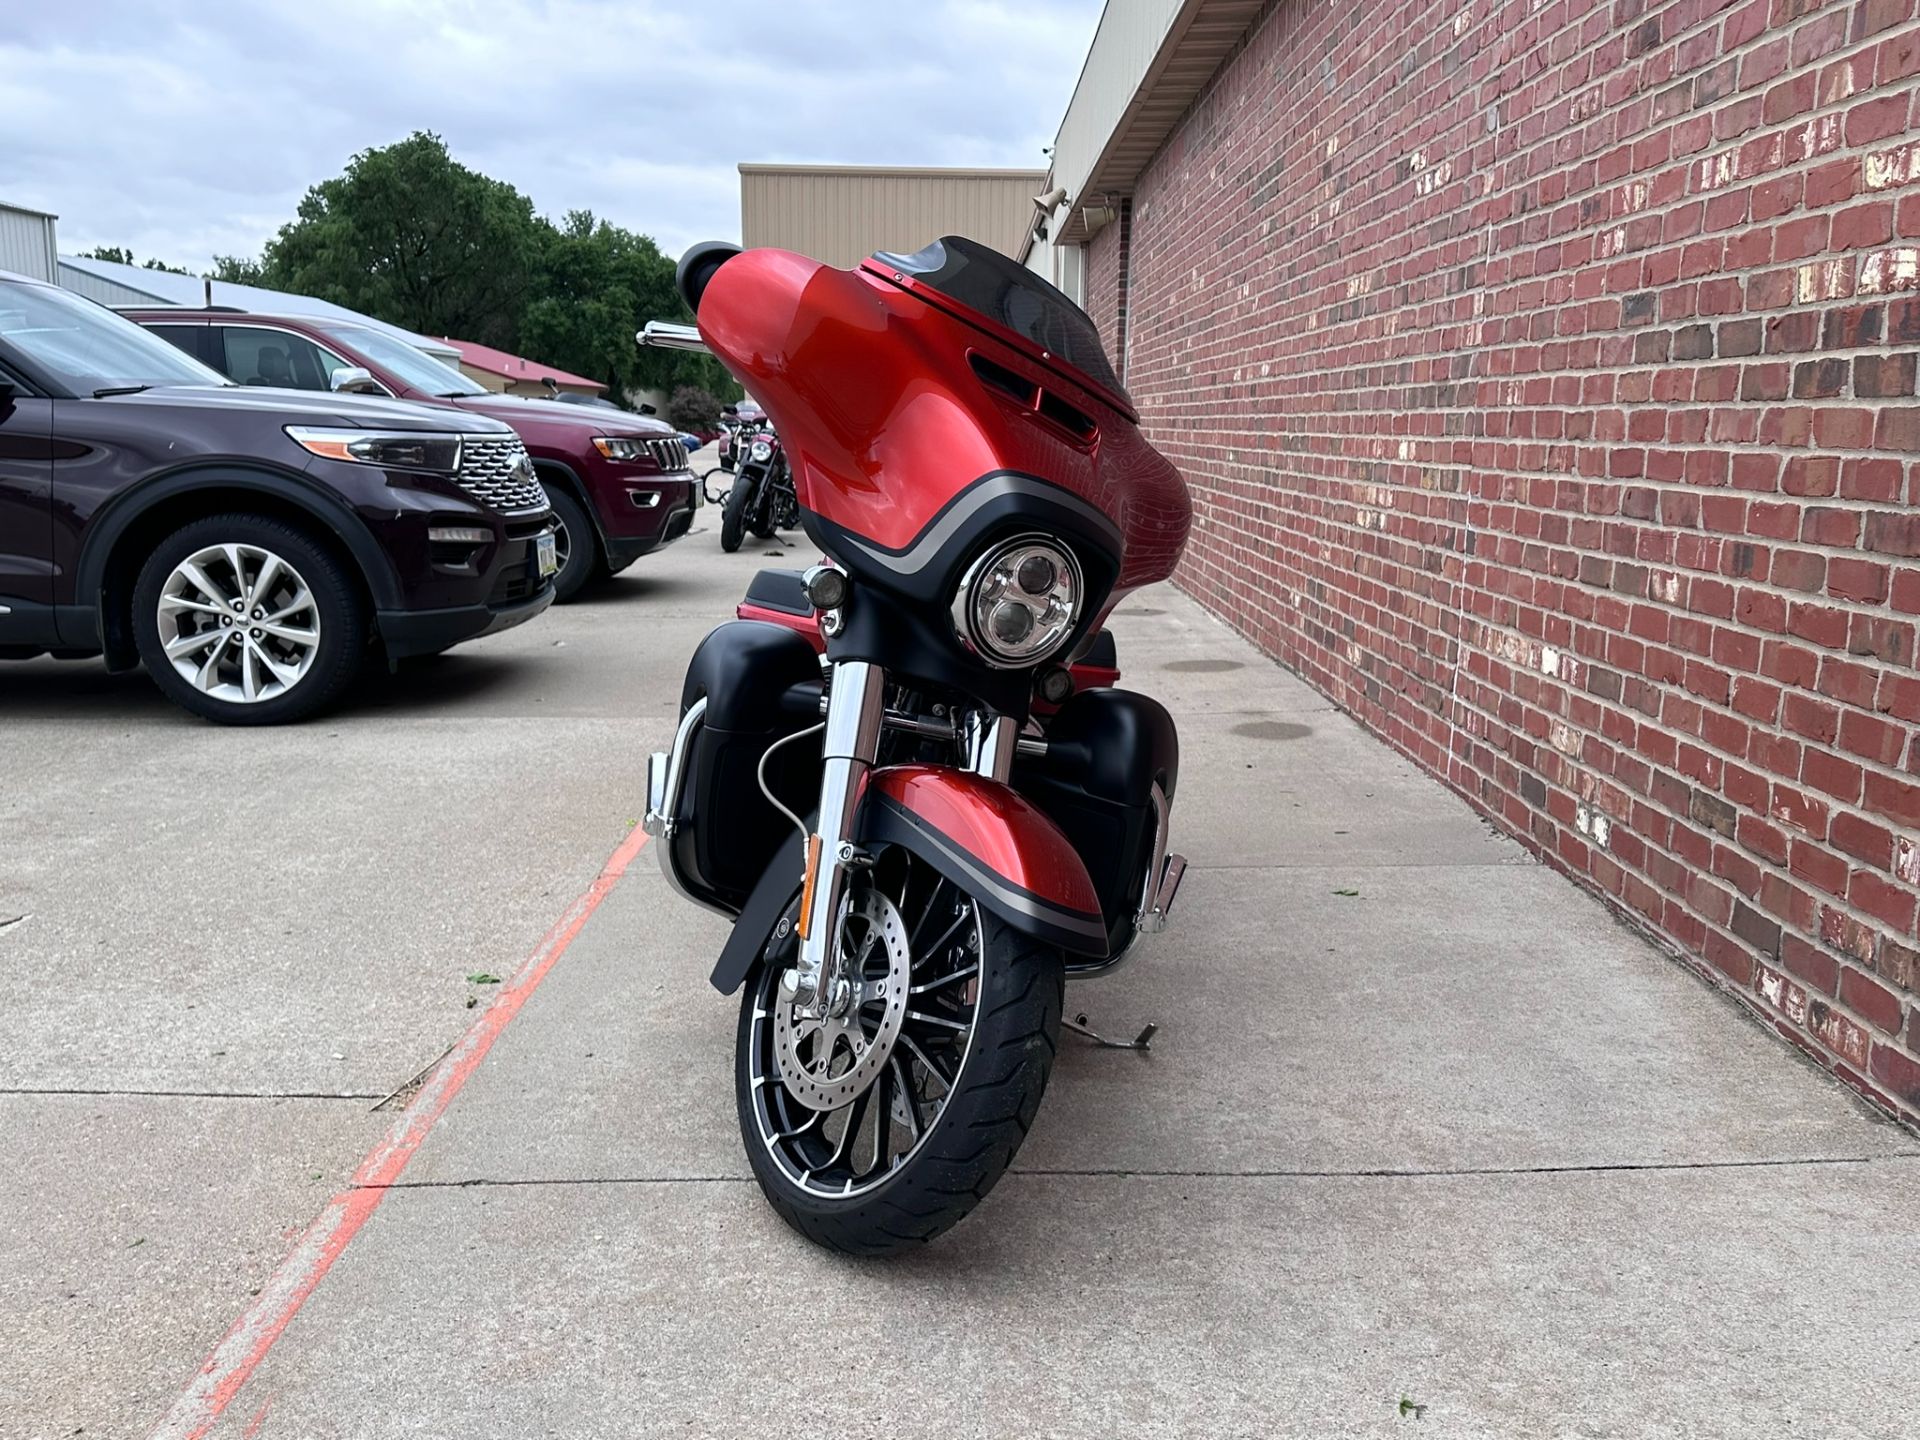 2018 Harley-Davidson CVO™ Street Glide® in Ames, Iowa - Photo 6